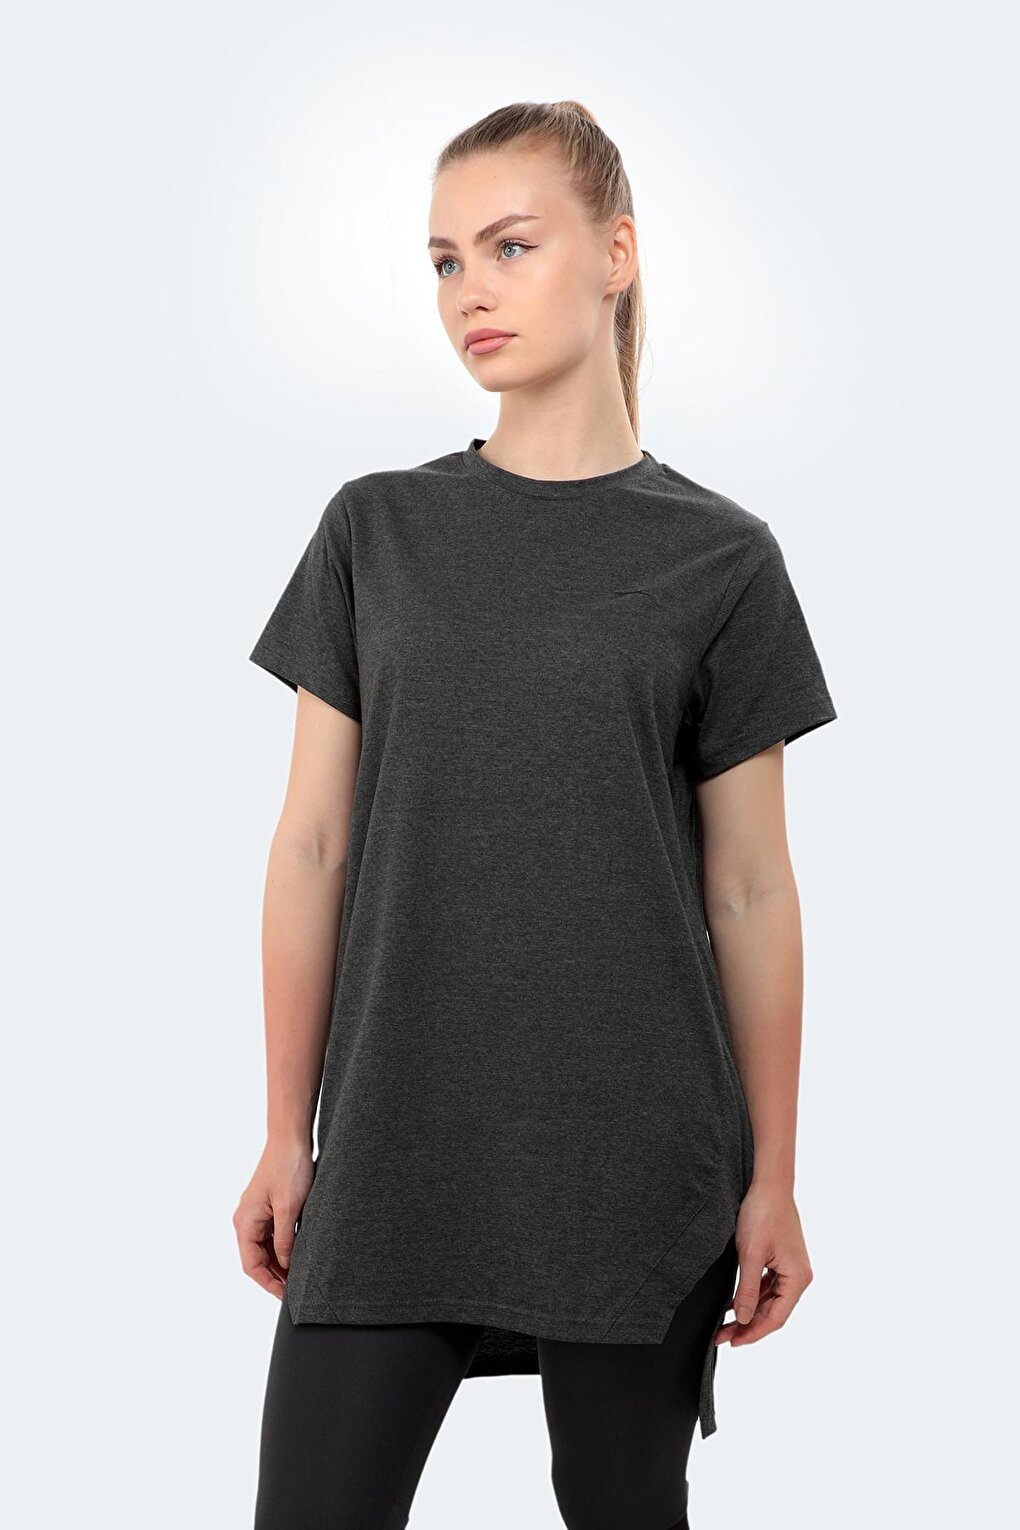 MIDORI Женская футболка с коротким рукавом темно-серая SLAZENGER